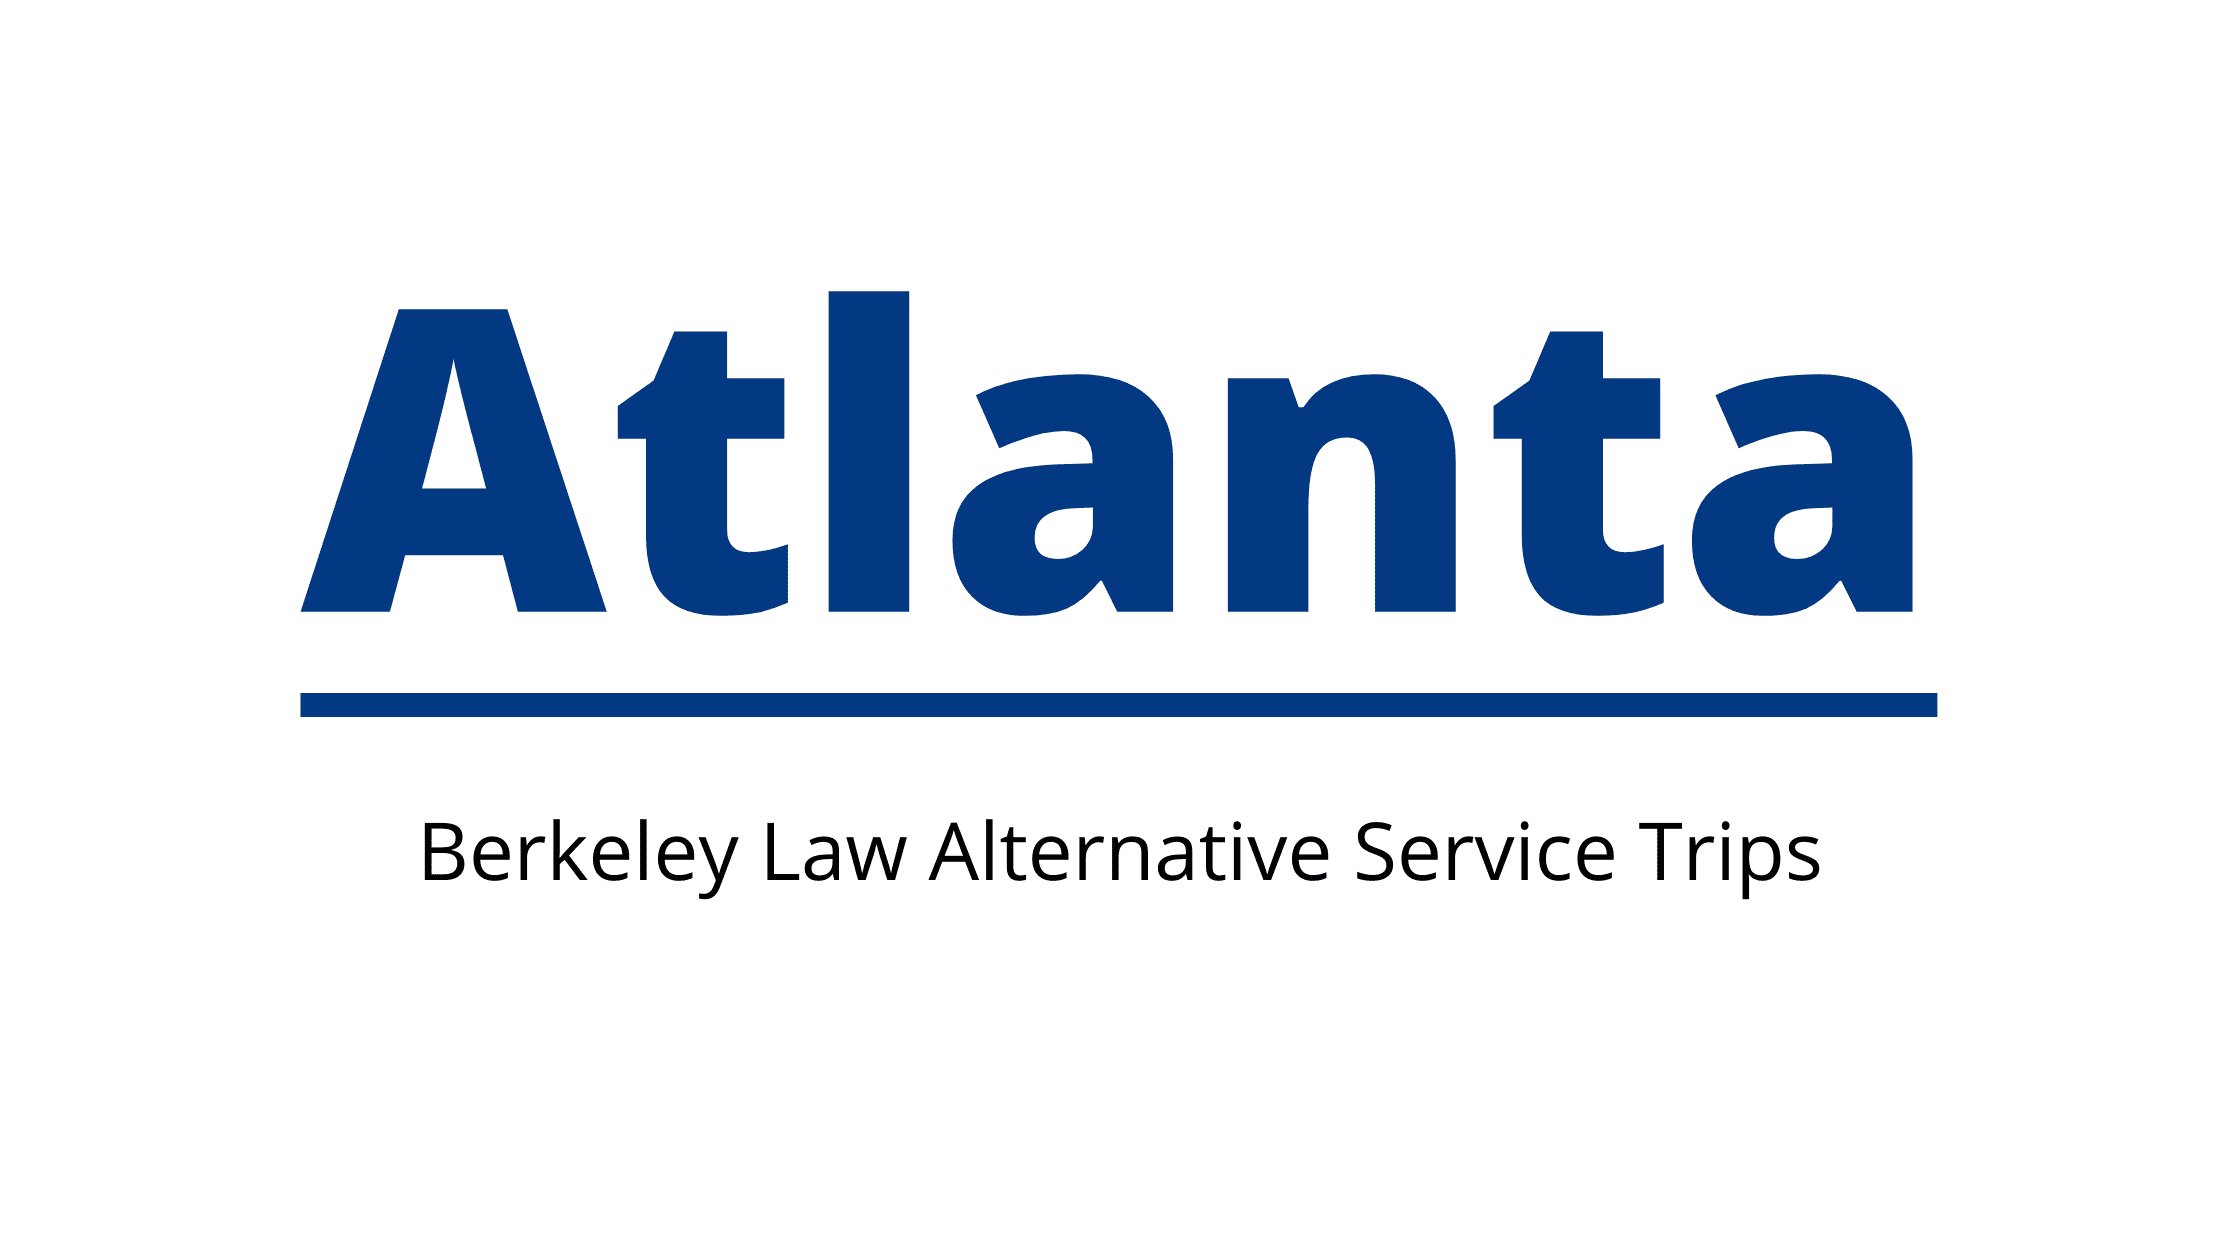 Atlanta Berkeley Law Alternative Service Trips Logo